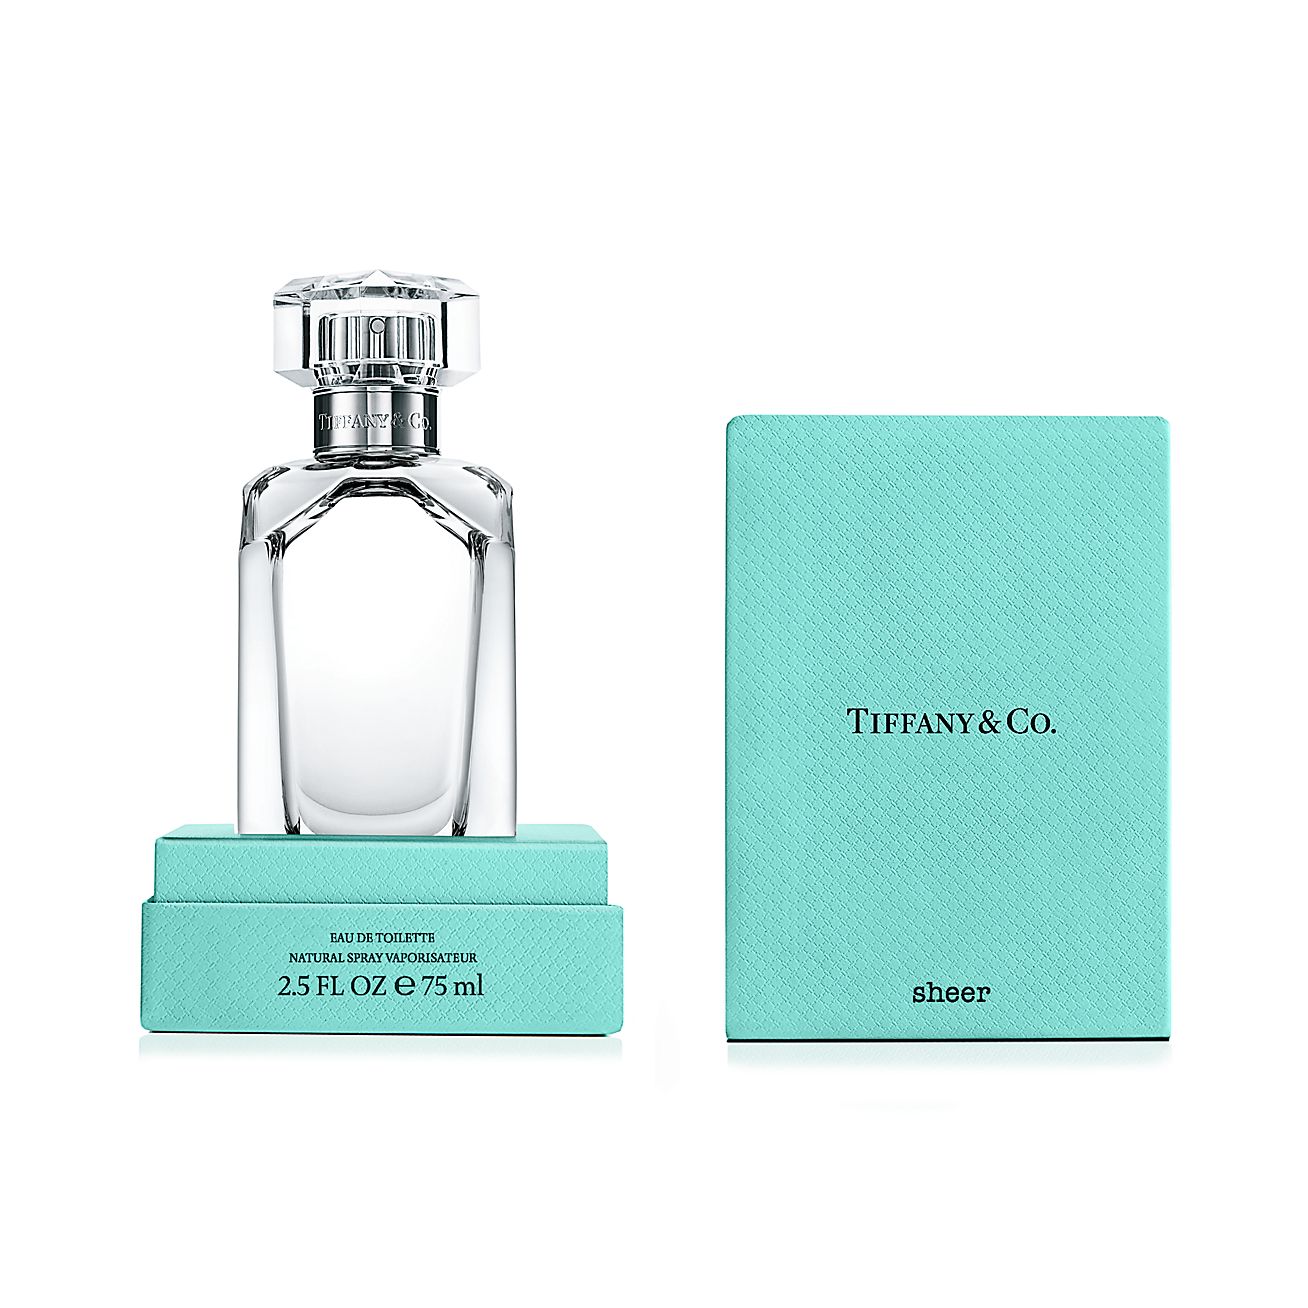 tiffany sheer perfume uk